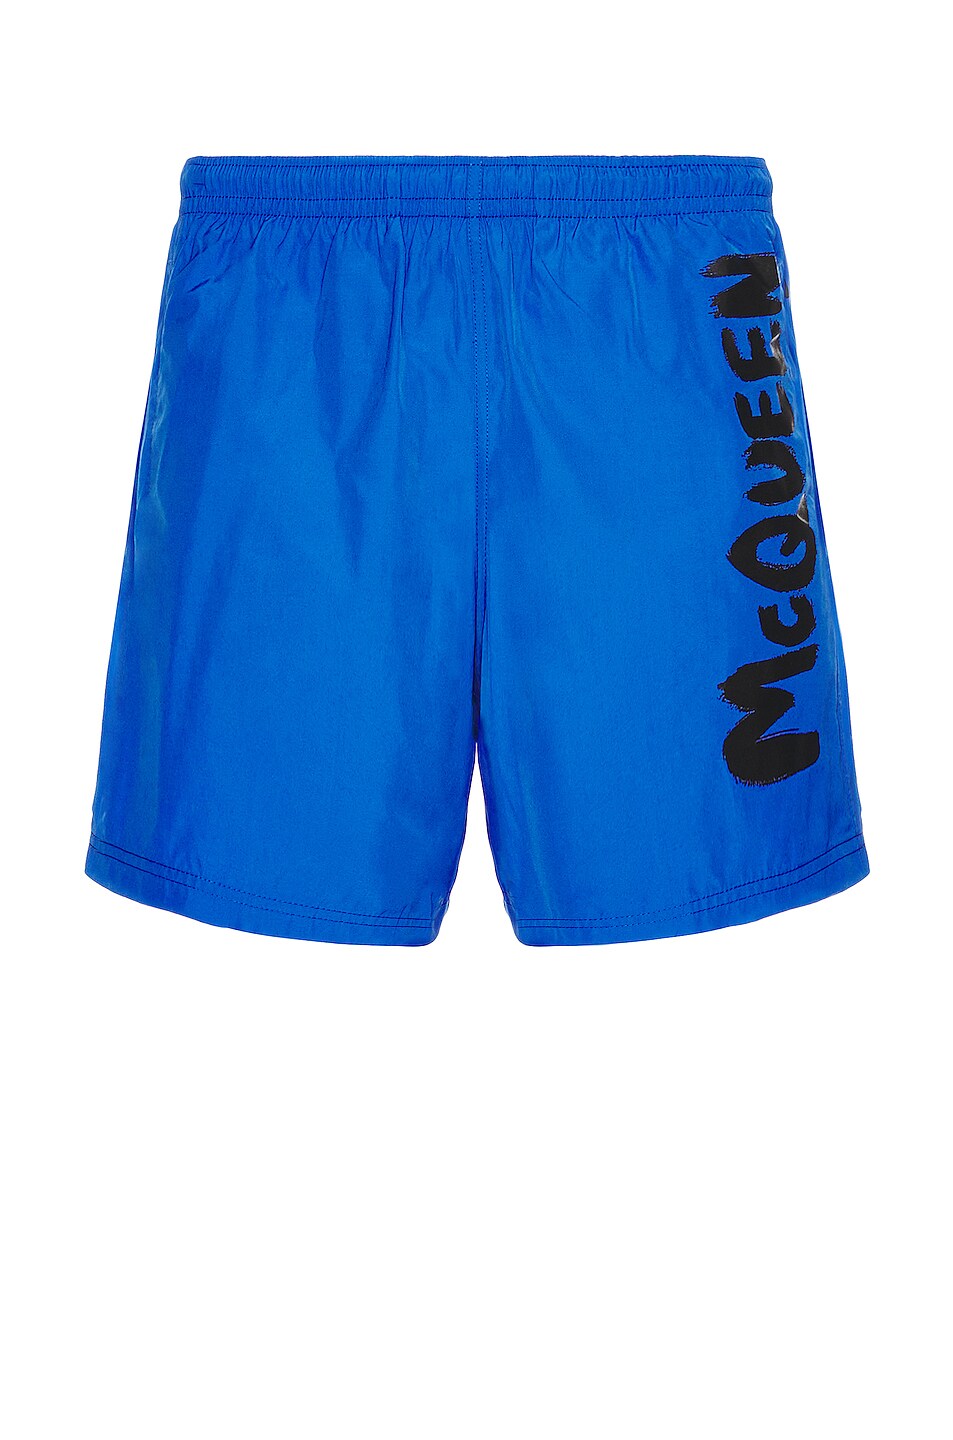 Image 1 of Alexander McQueen Graphic Swimwear in Royal Blue & Black